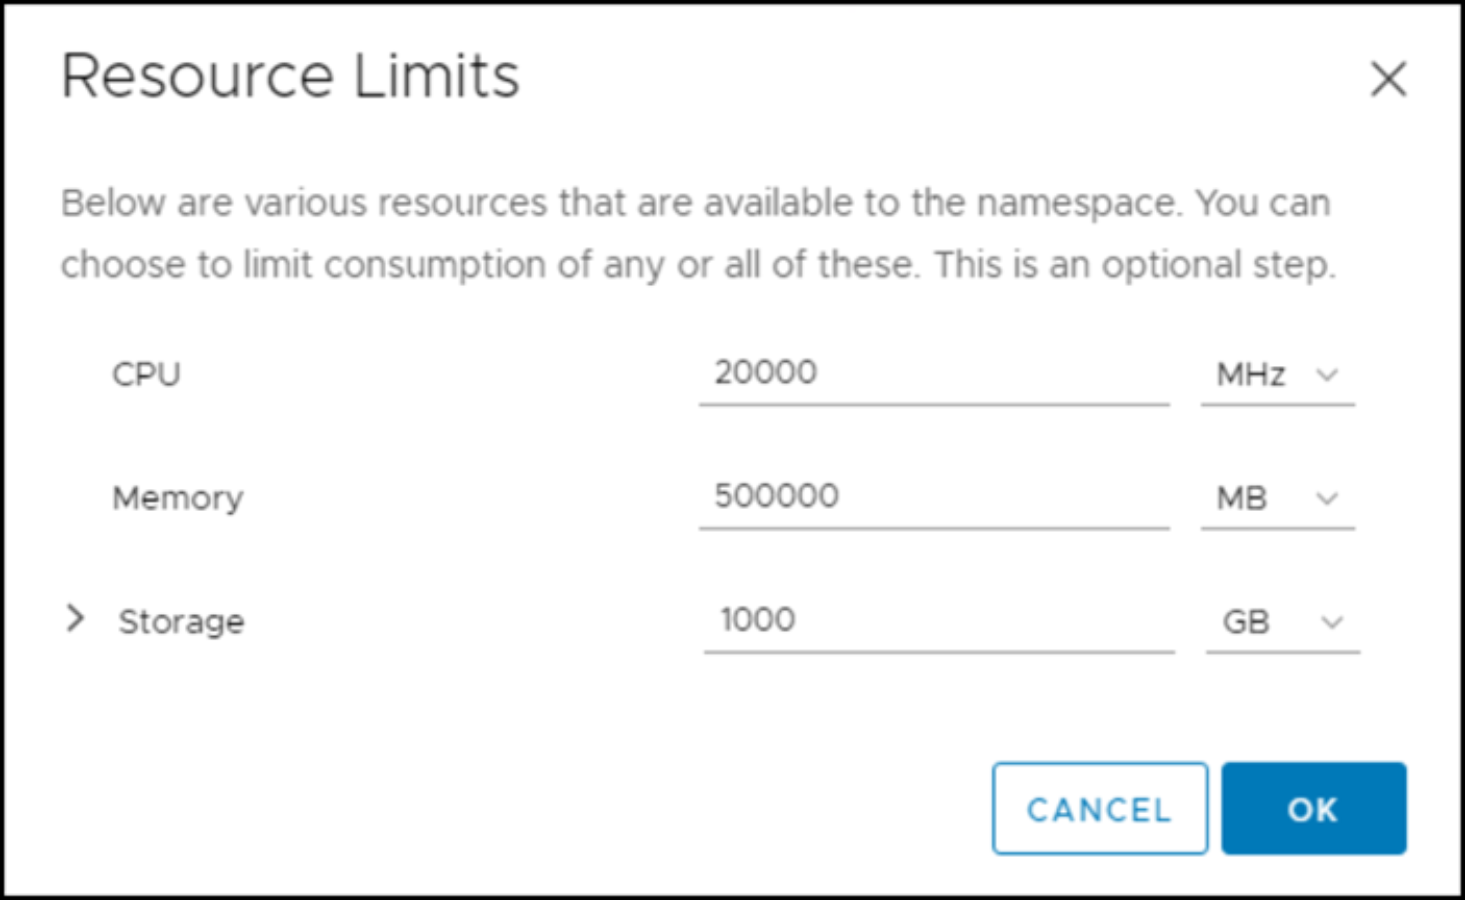 Namespace capacity and usage – set limits